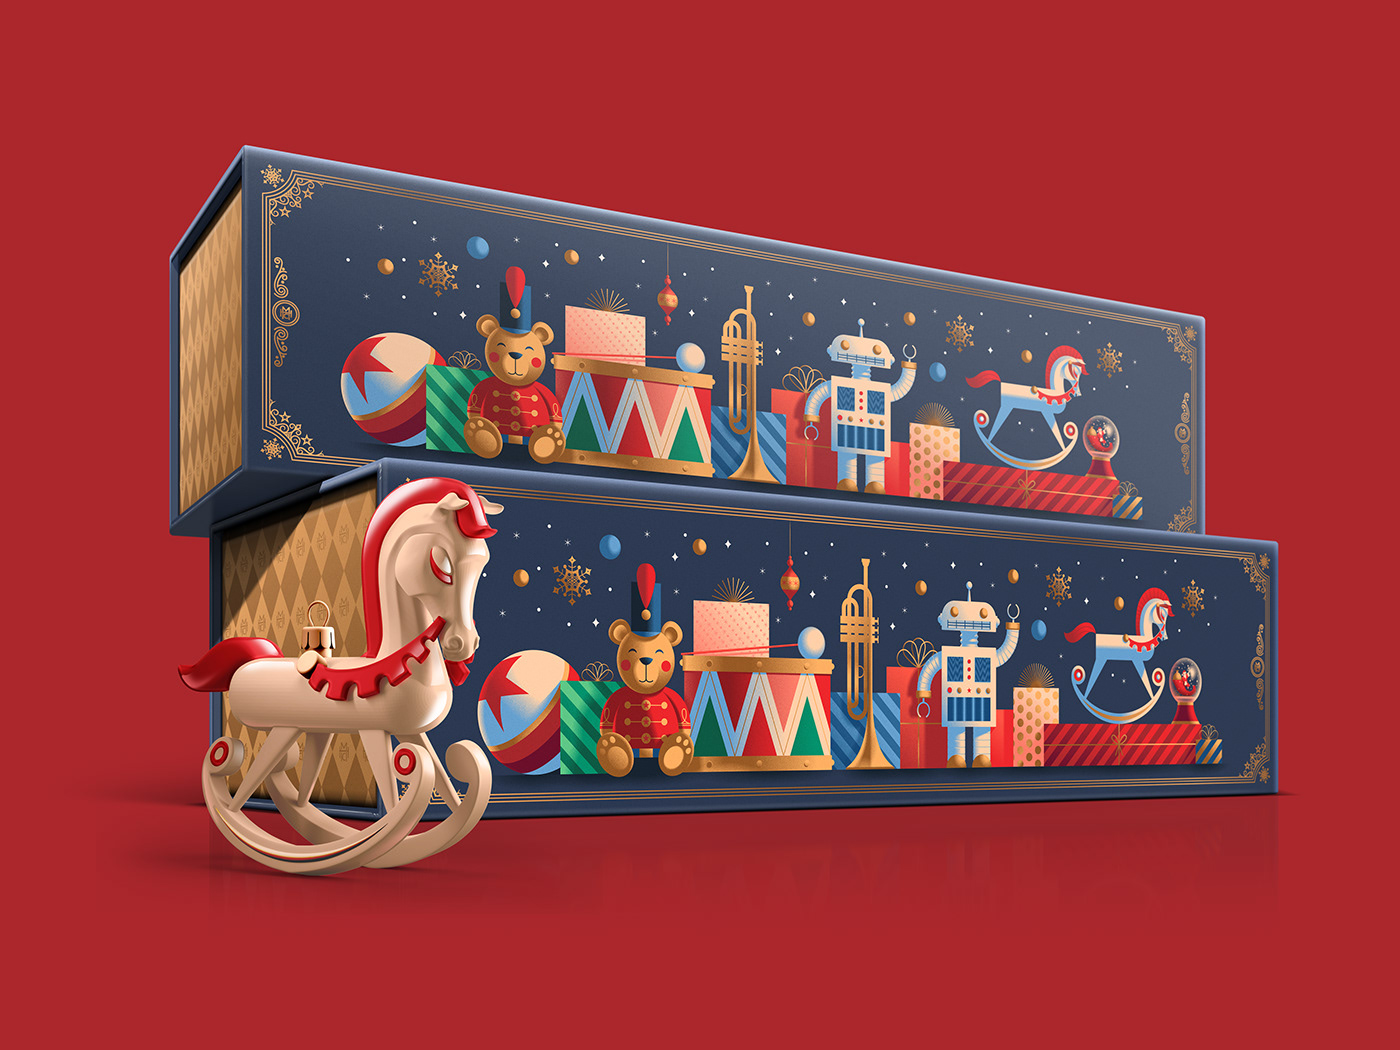 ILLUSTRATION  branding  Brand Design Christmas Holiday Macys santa vintage New York celebration